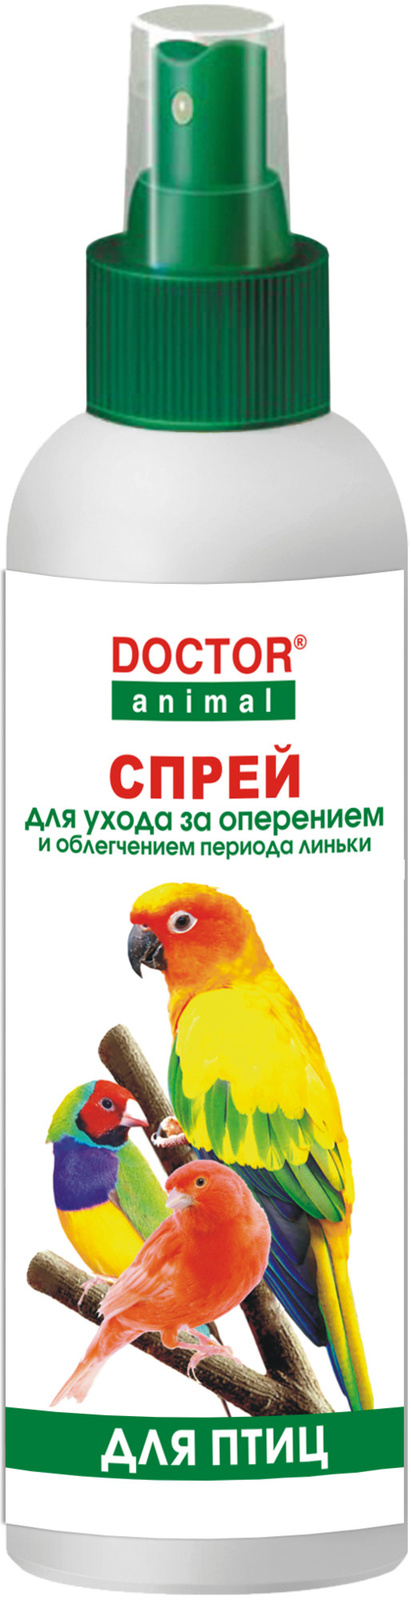 Бионикс Бионикс спрей DOCTOR Animal для ухода за оперением, для птиц (215 г)